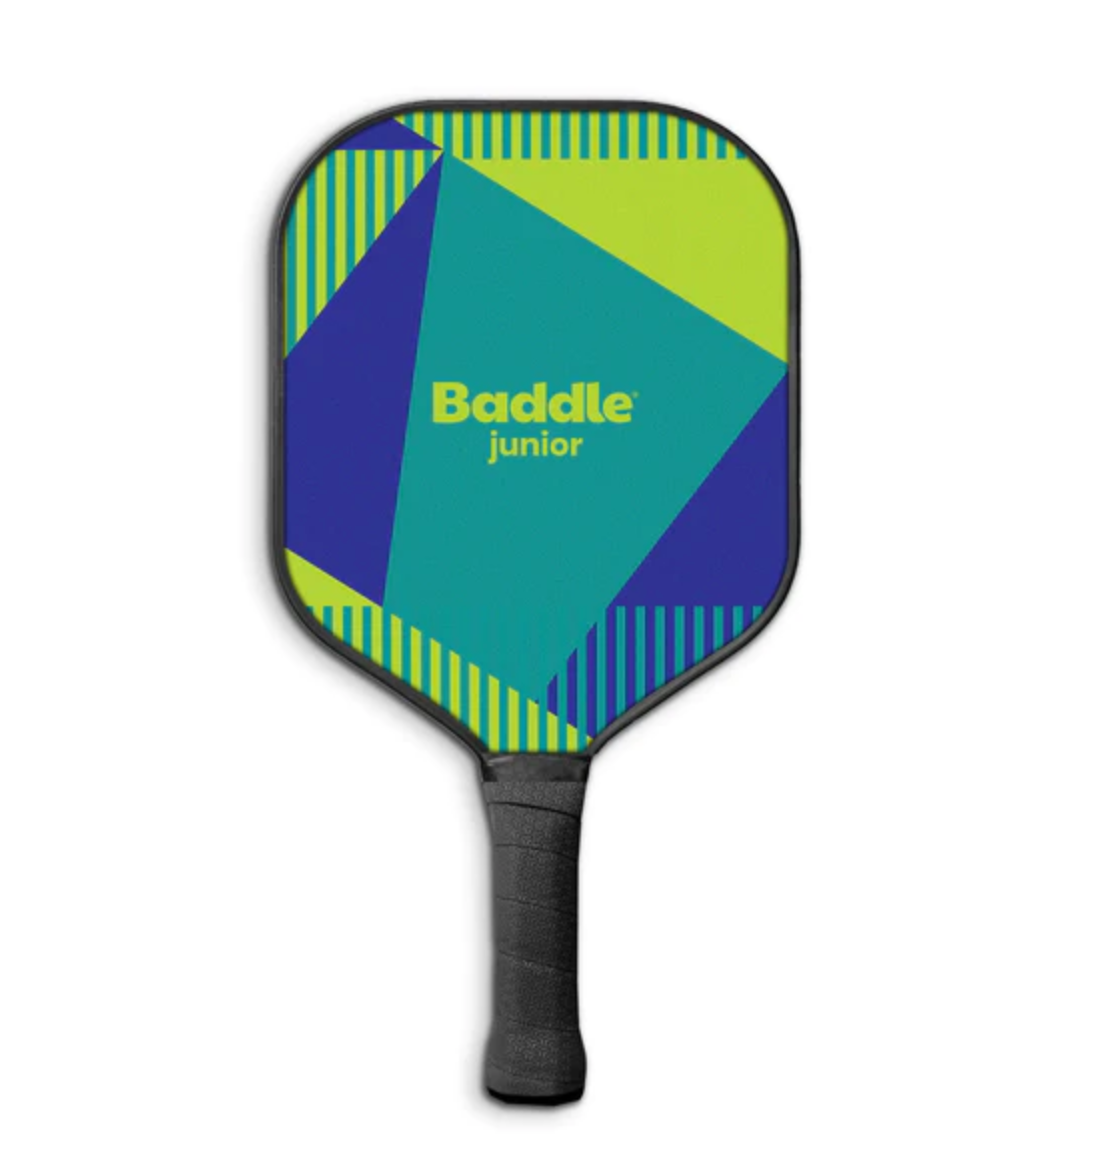 Baddle Junior Paddle